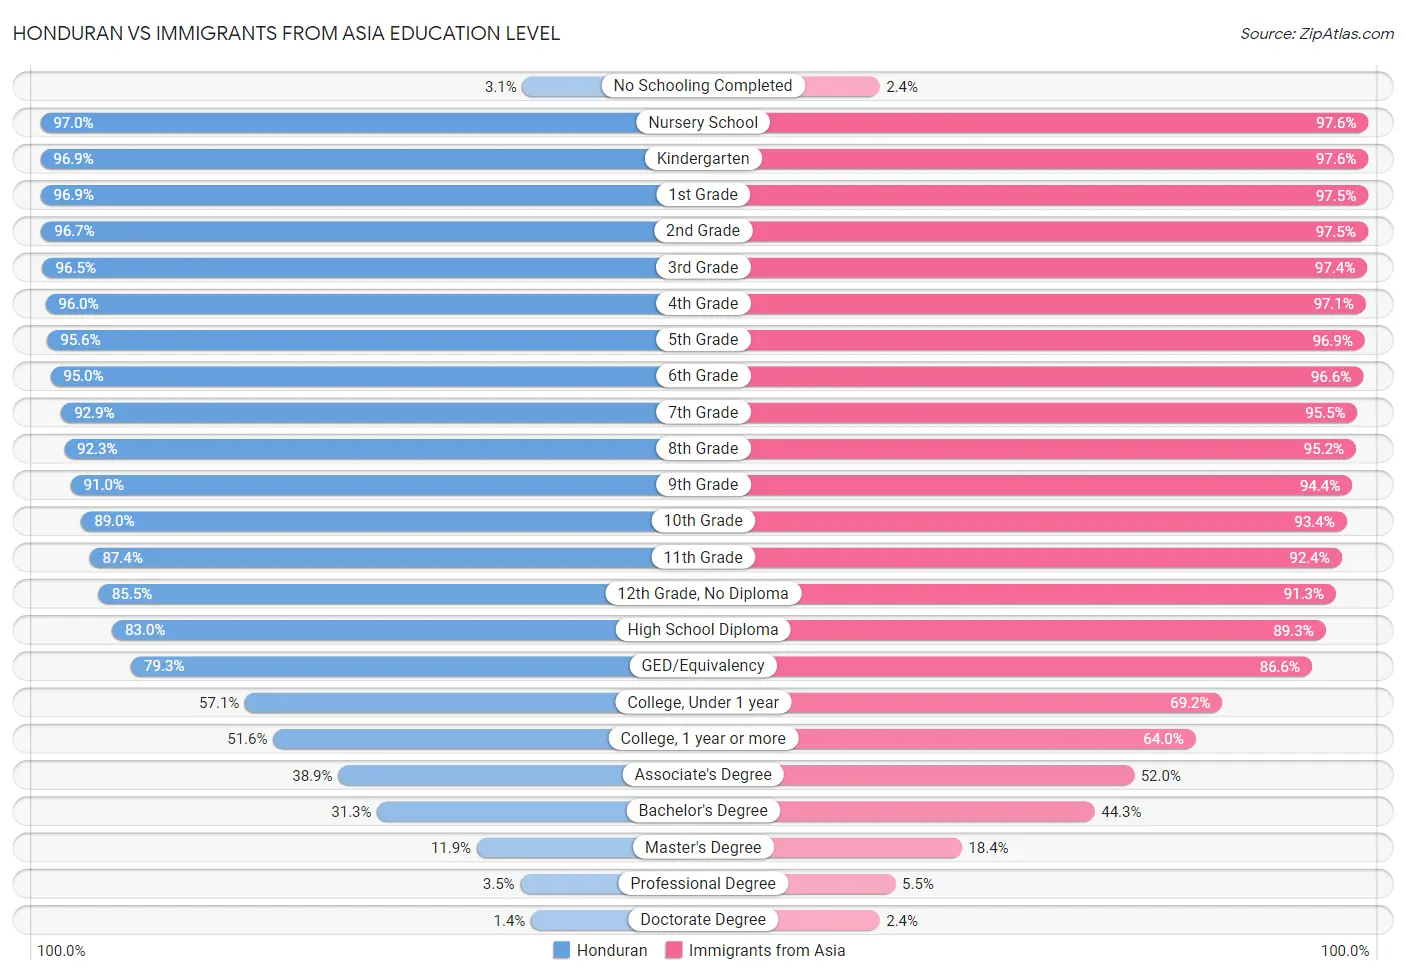 Honduran vs Immigrants from Asia Education Level